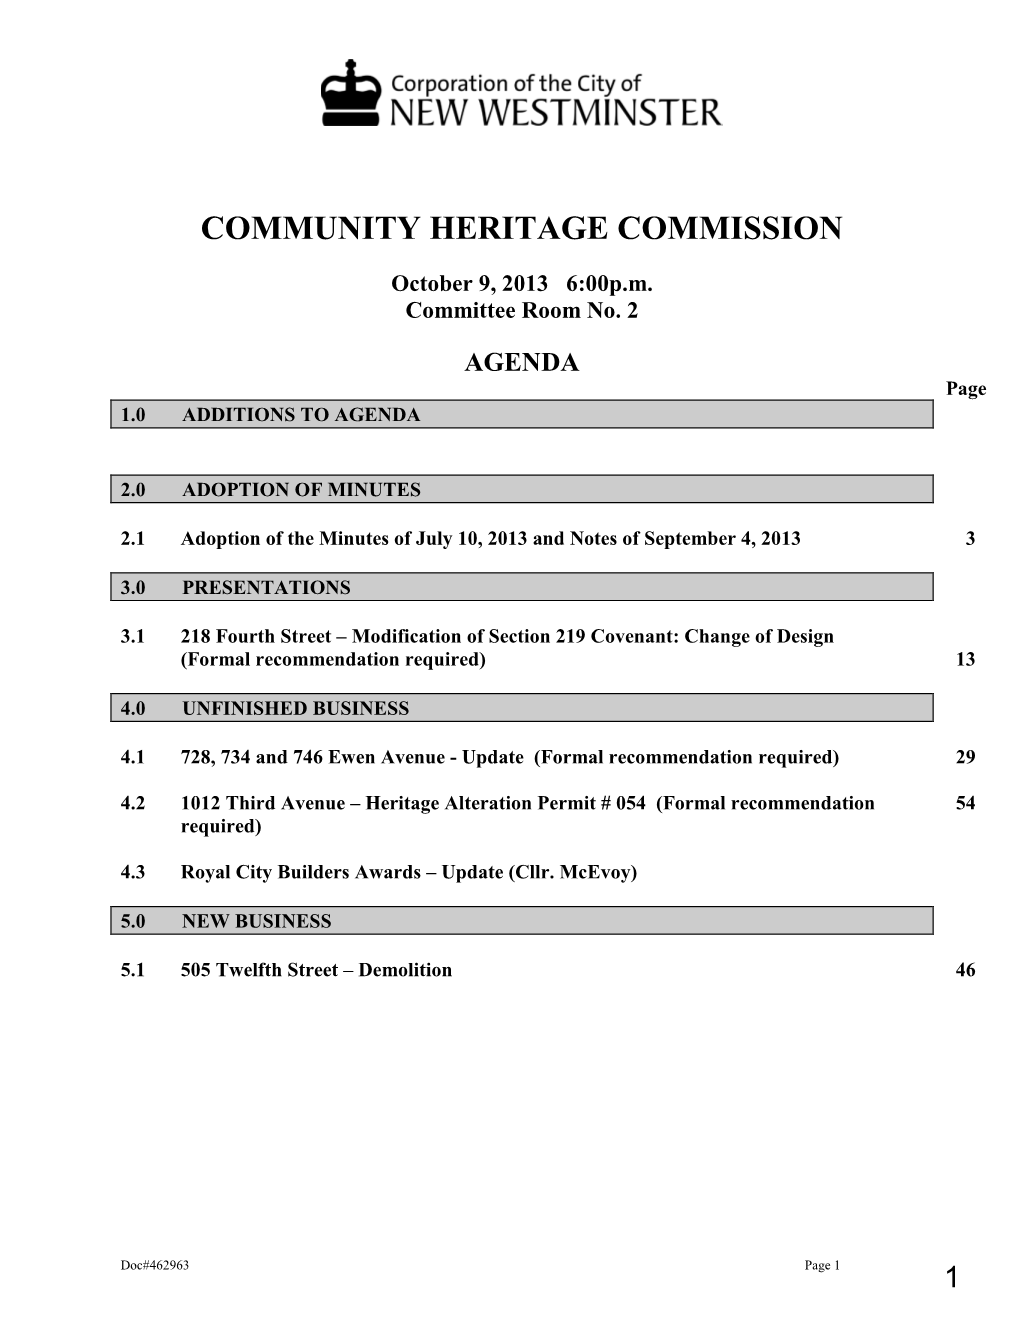 Community Heritage Commission